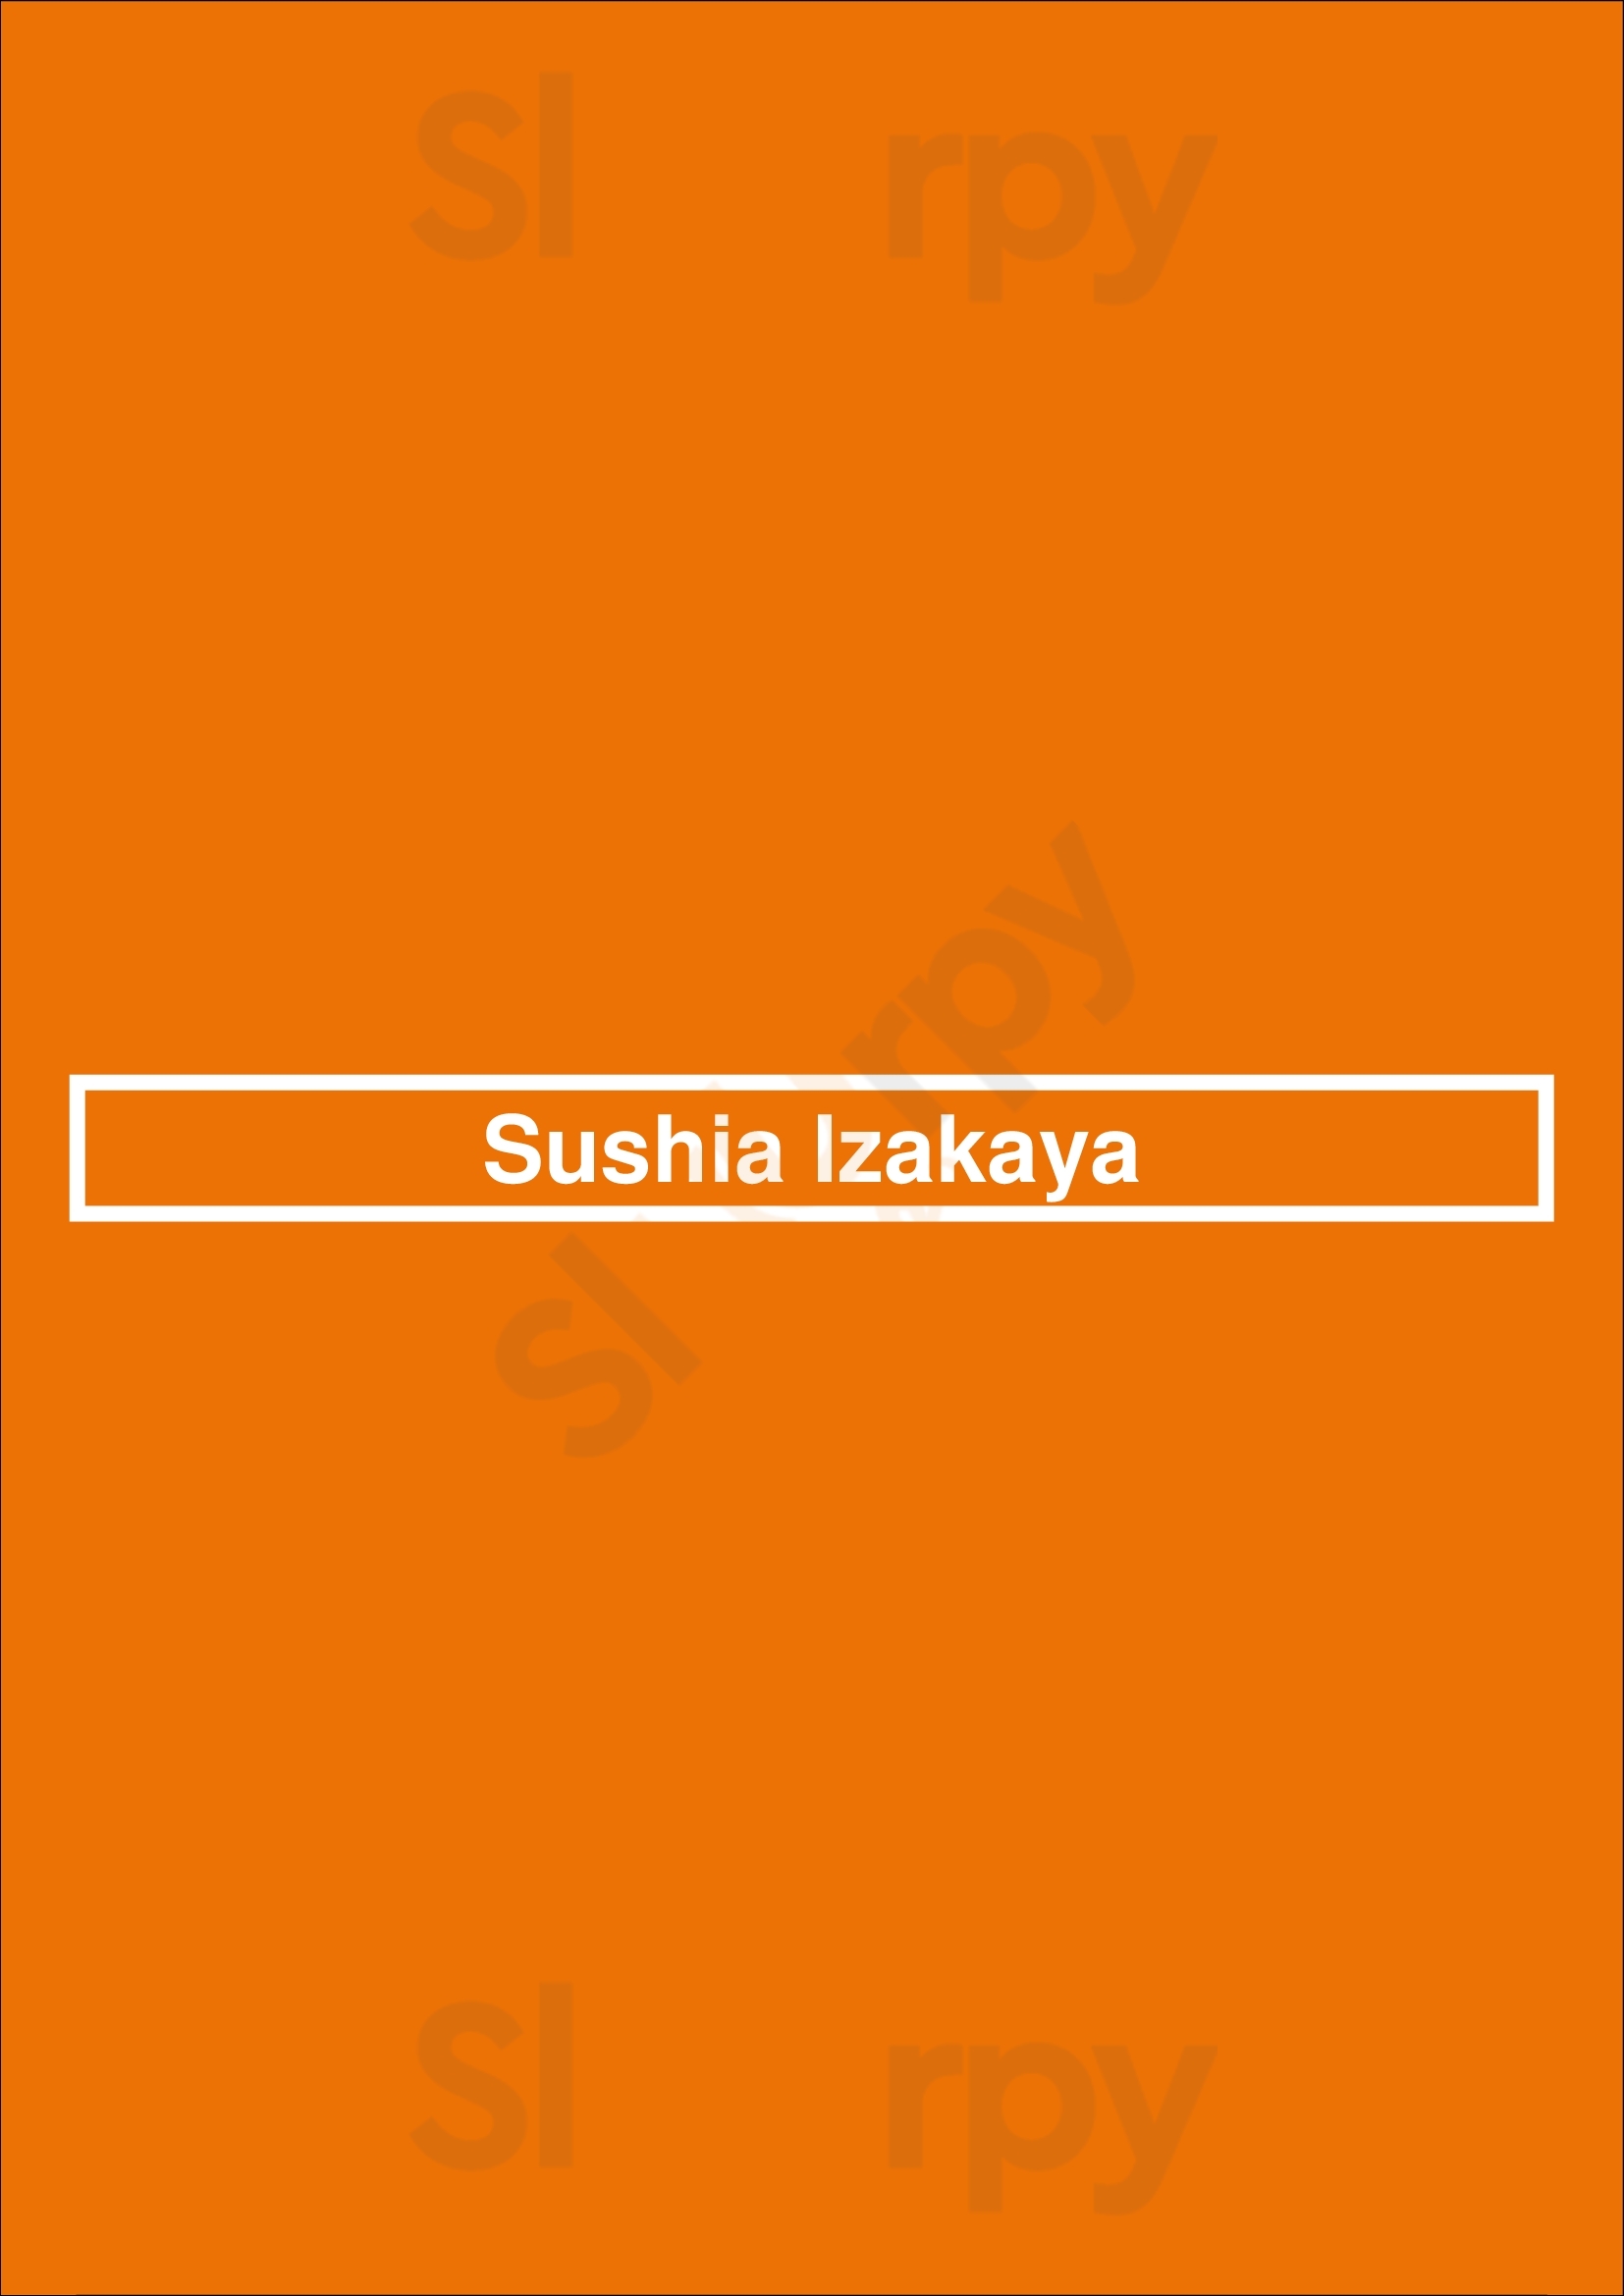 Sushia Izakaya Perth Menu - 1